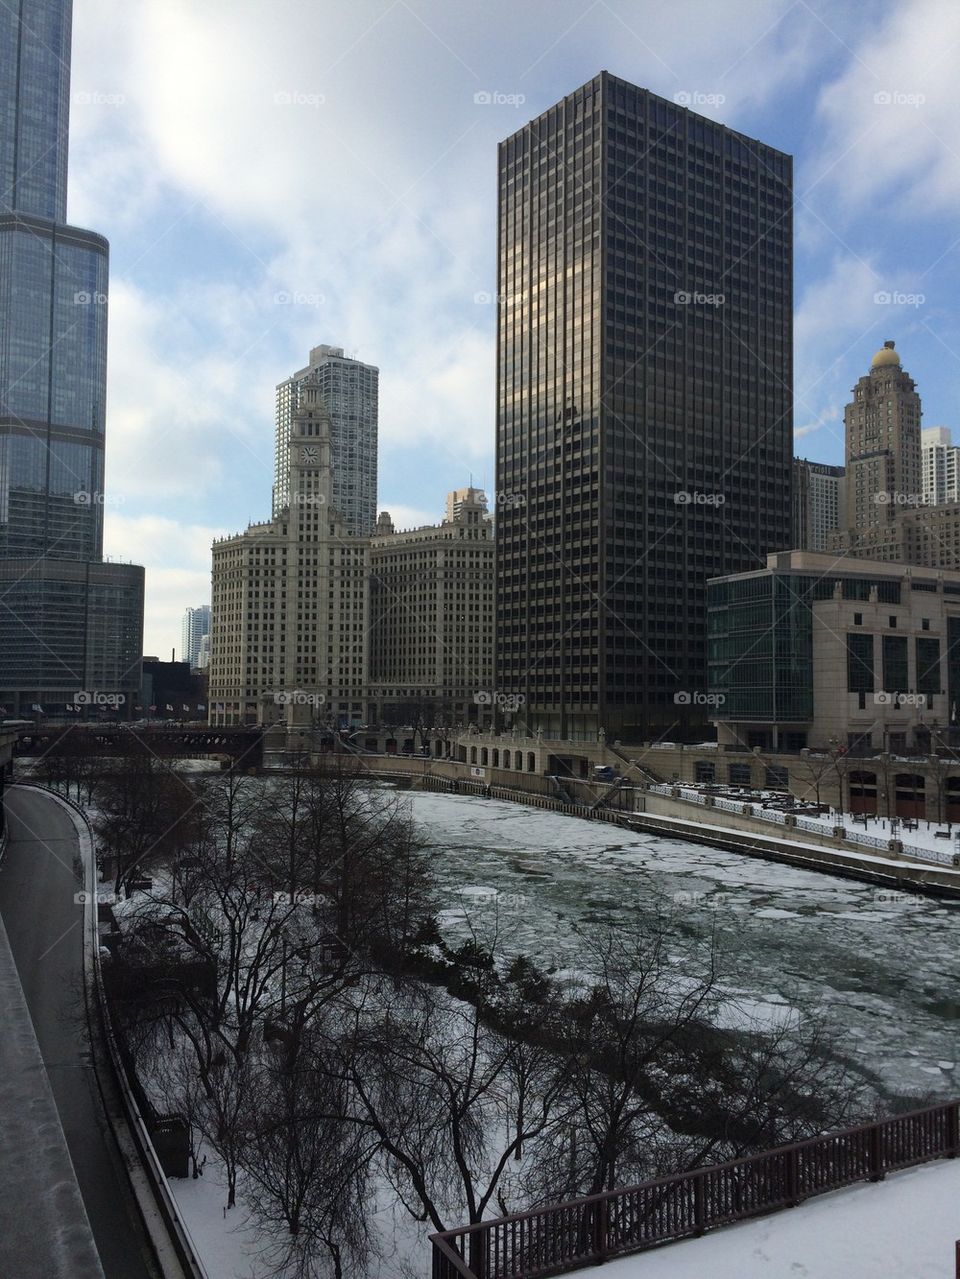 Chicago sights 